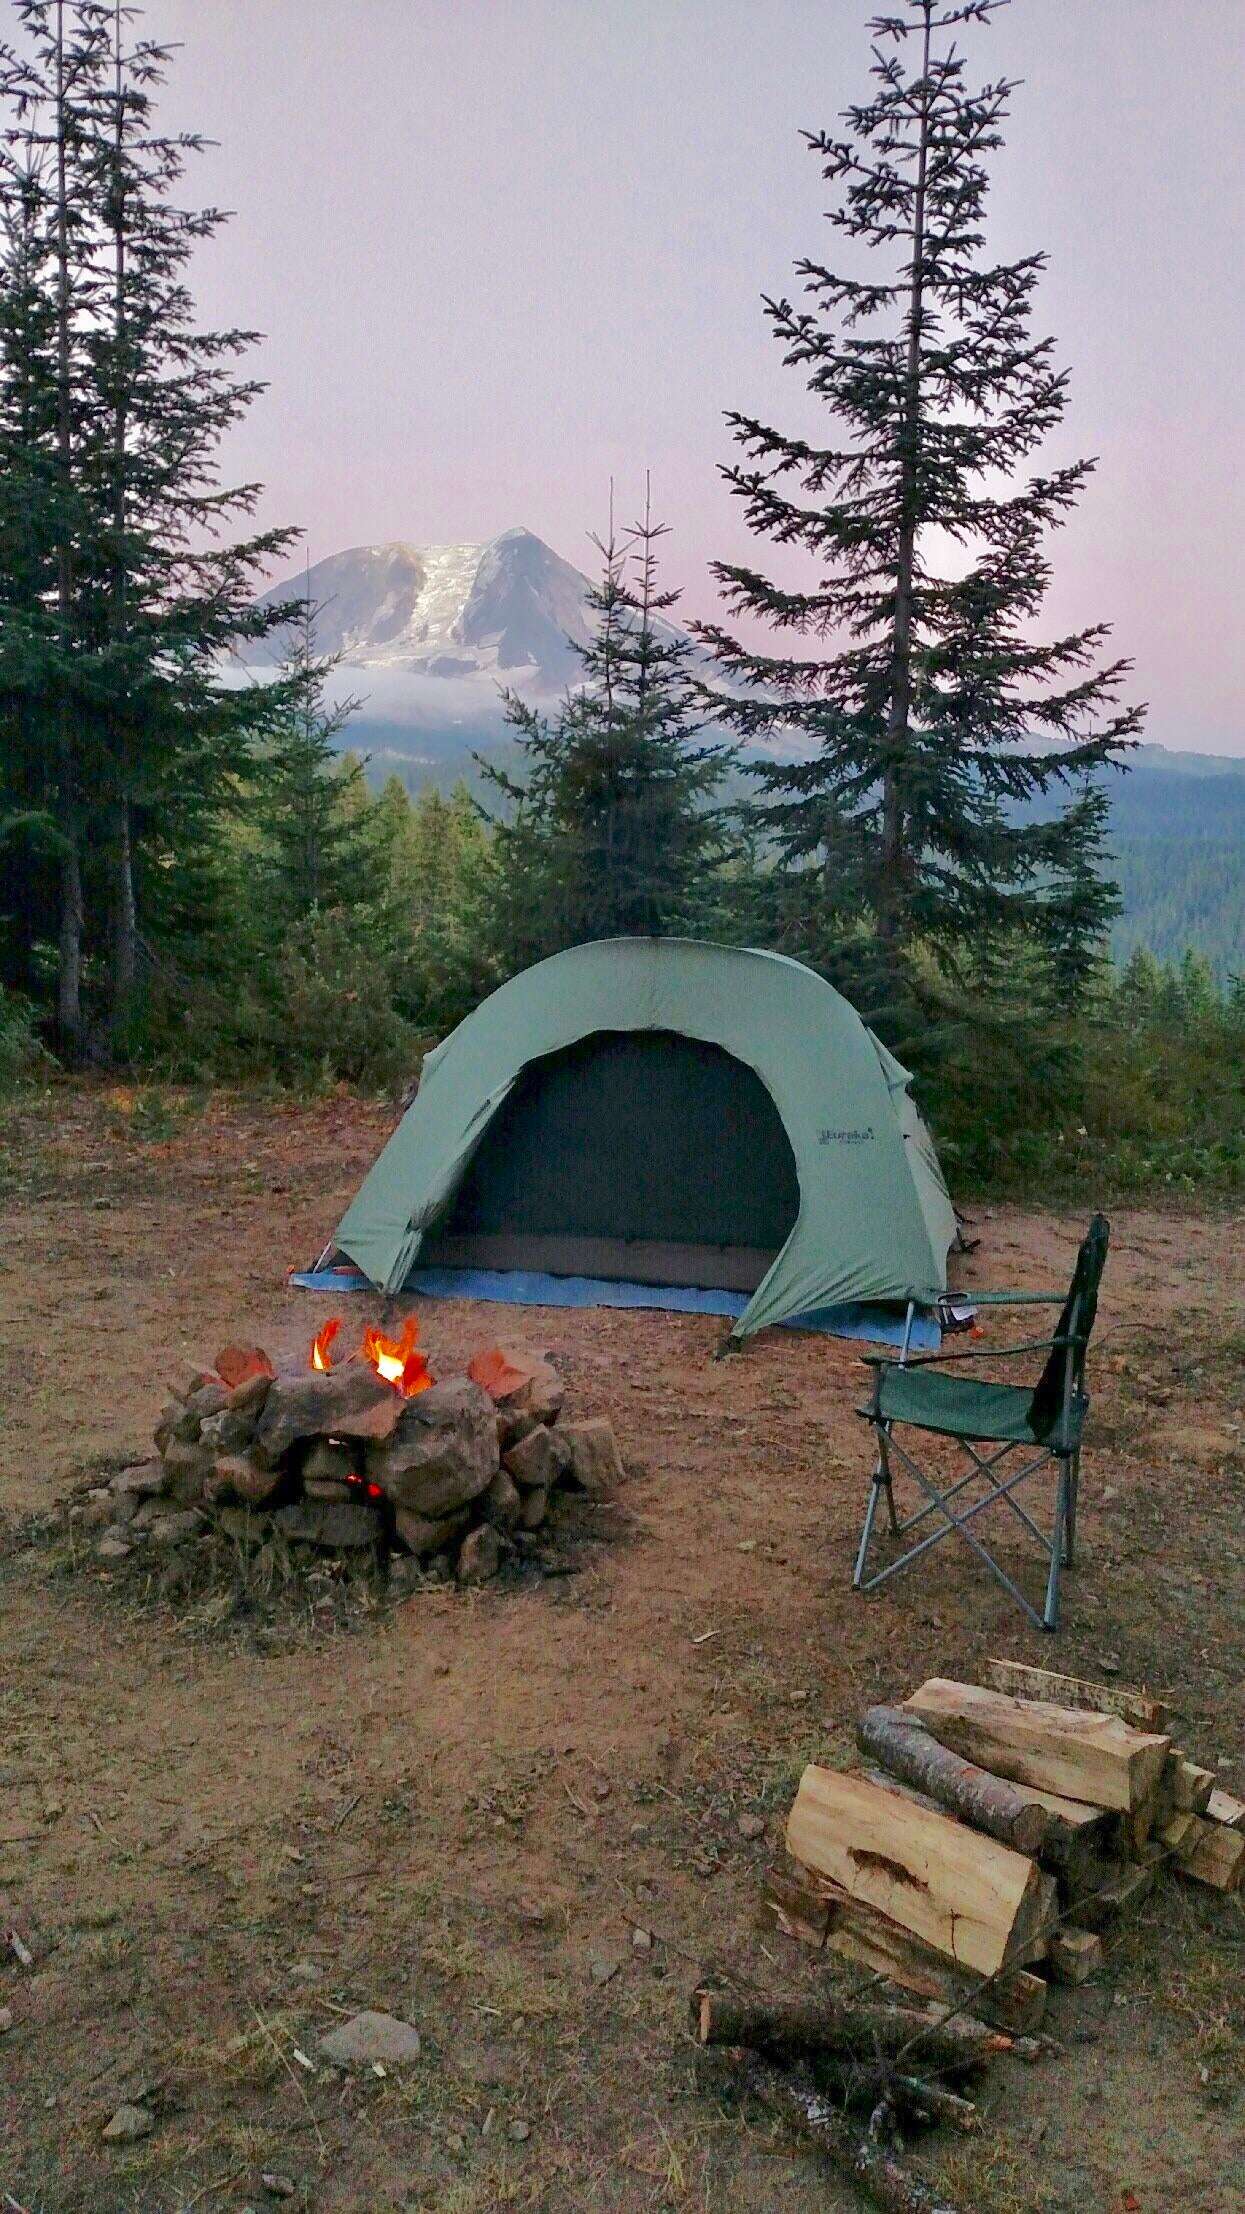 Soul Medicine. Gifford Pinchot National Forest, WA : camping